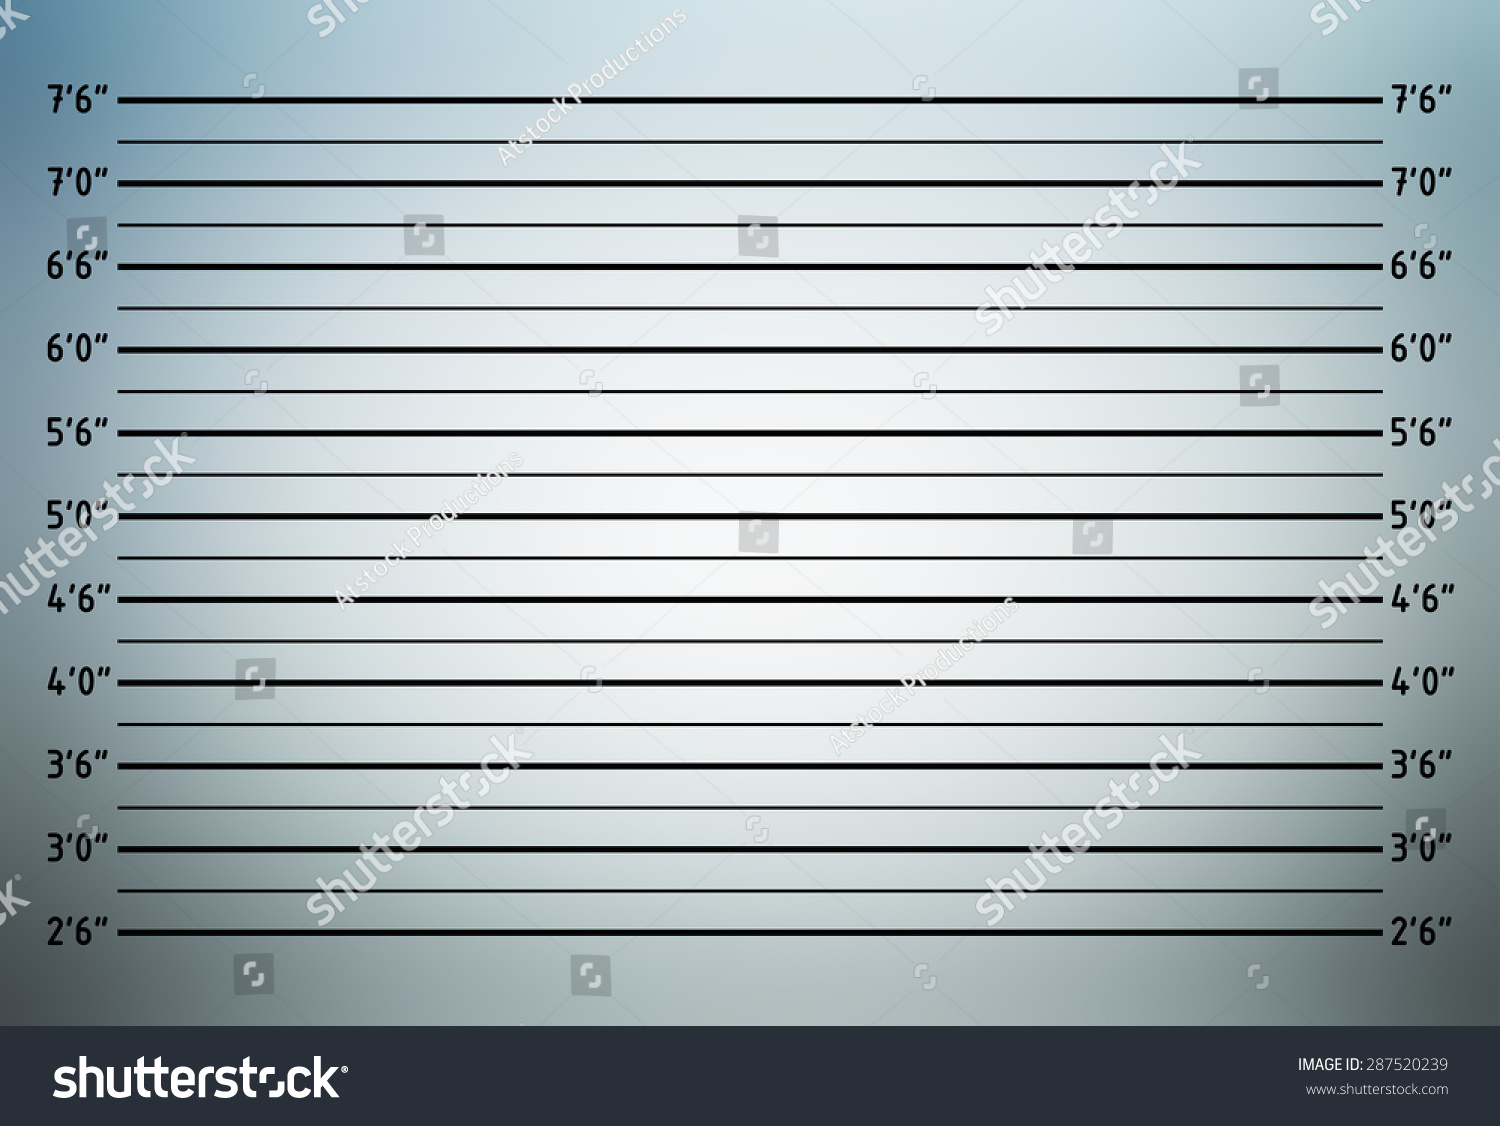 Police Lineup Mugshot Background Inch Unit Stock Illustration 287520239